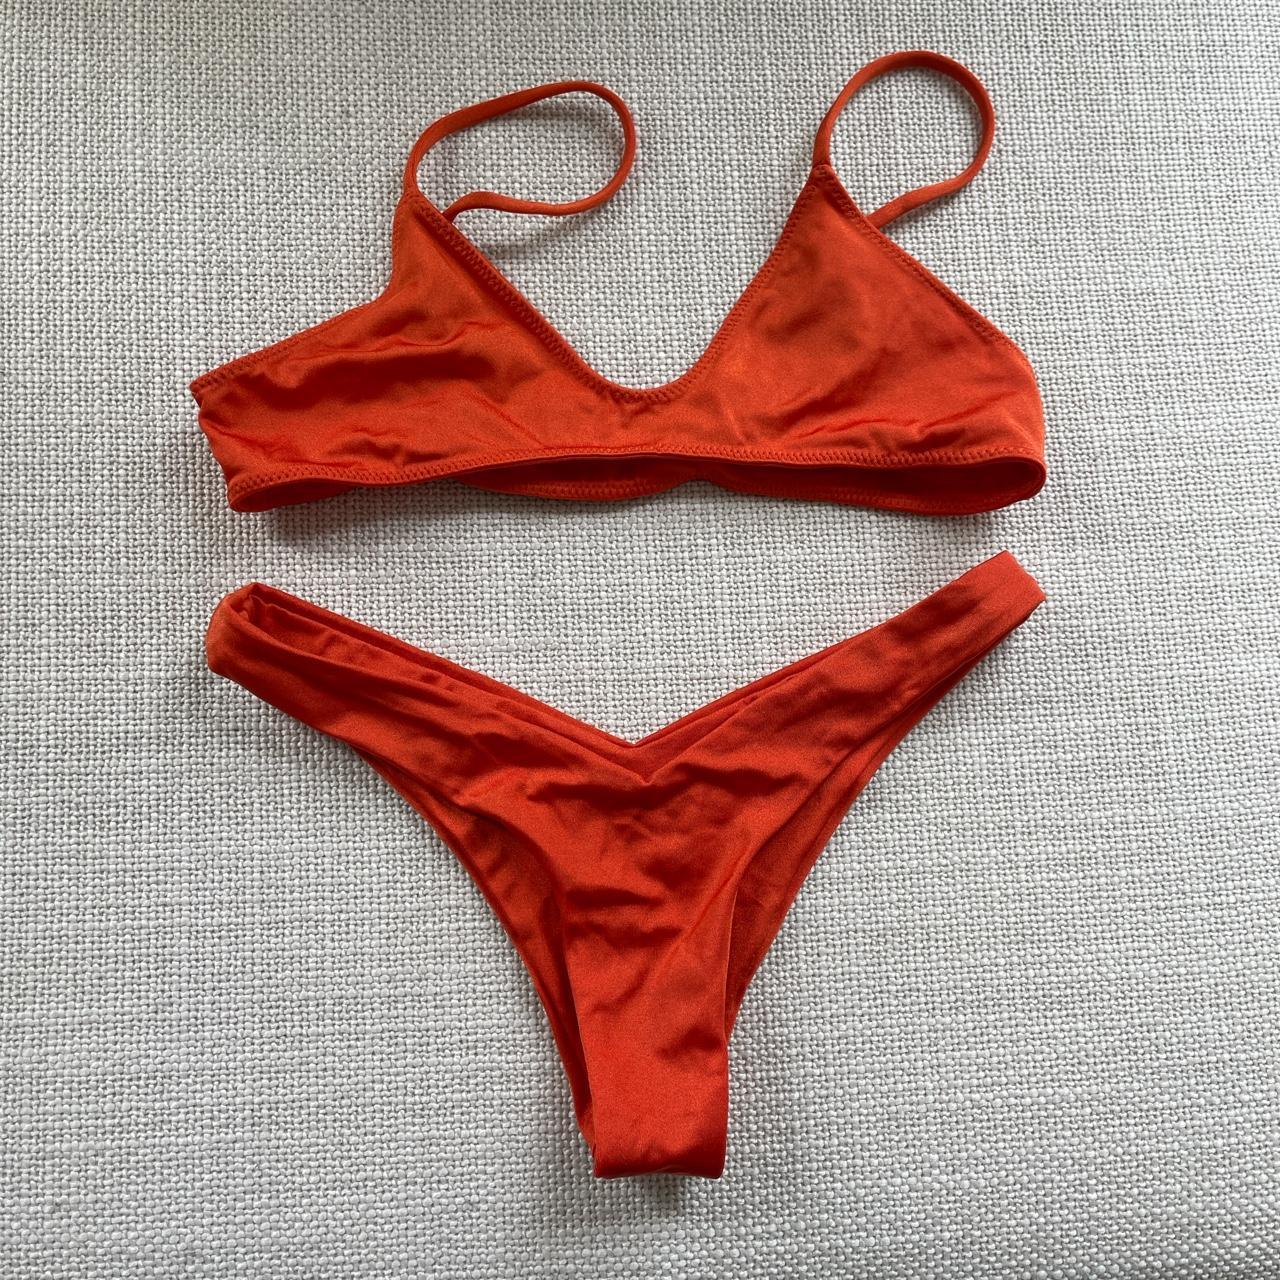 Acacia Swimwear Women's Red and Orange Bikinis-and-tankini-sets | Depop